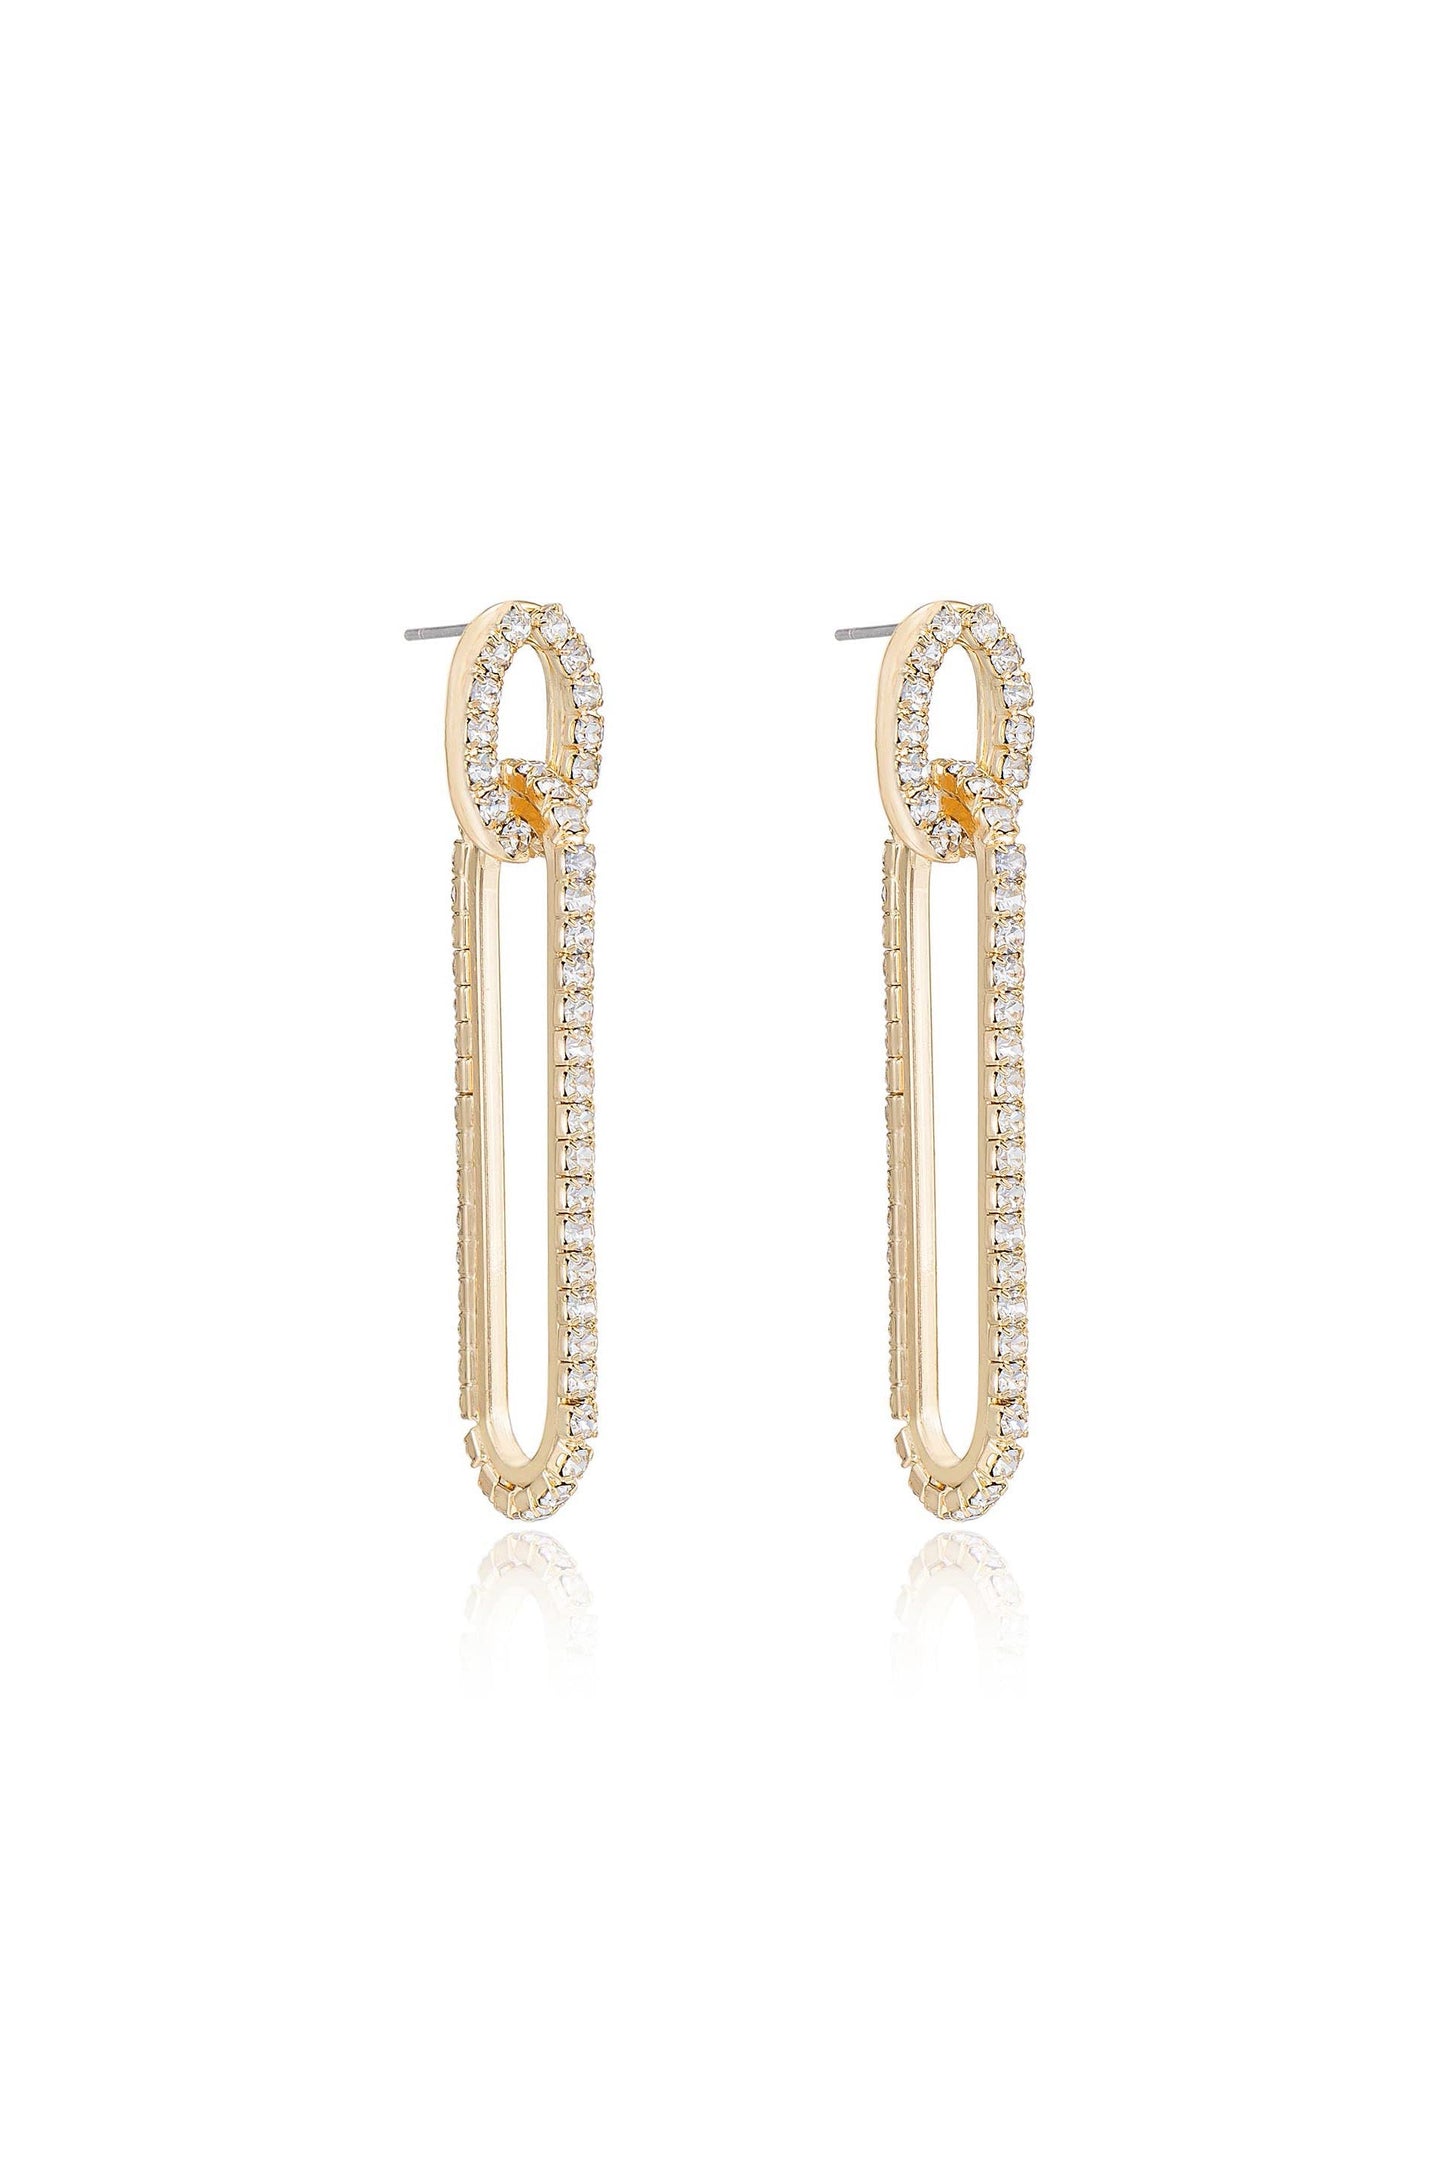 Crystal Paperclip Earrings - Premium Earrings from Ettika - Just $55! Shop now at Tooksie